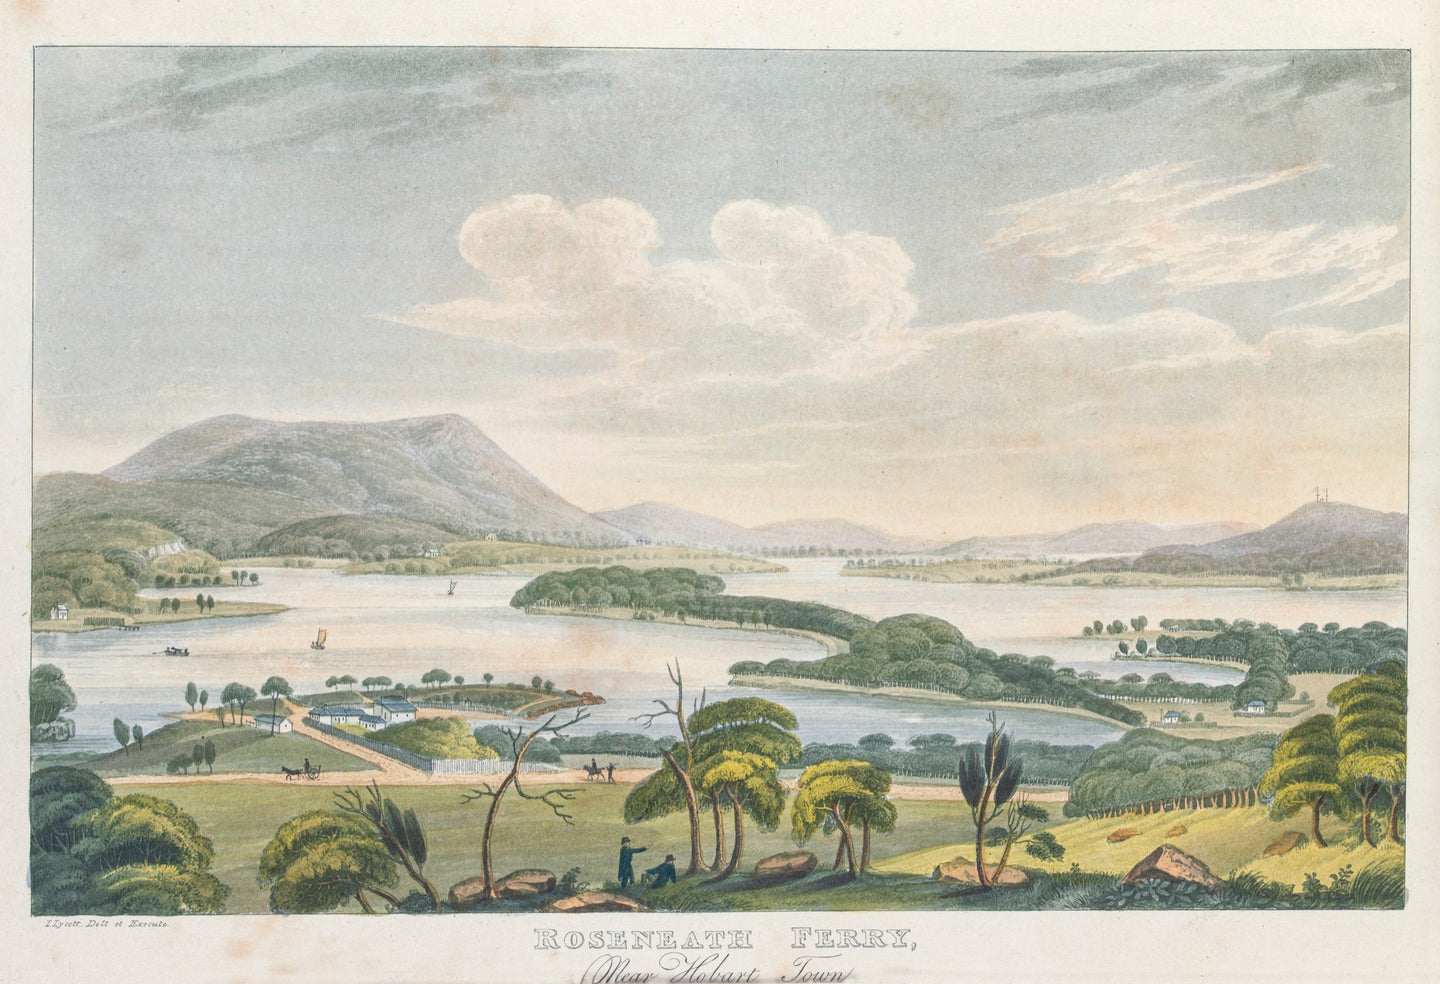 Roseneath Ferry, Near Hobart Town, Van Diemen's Land